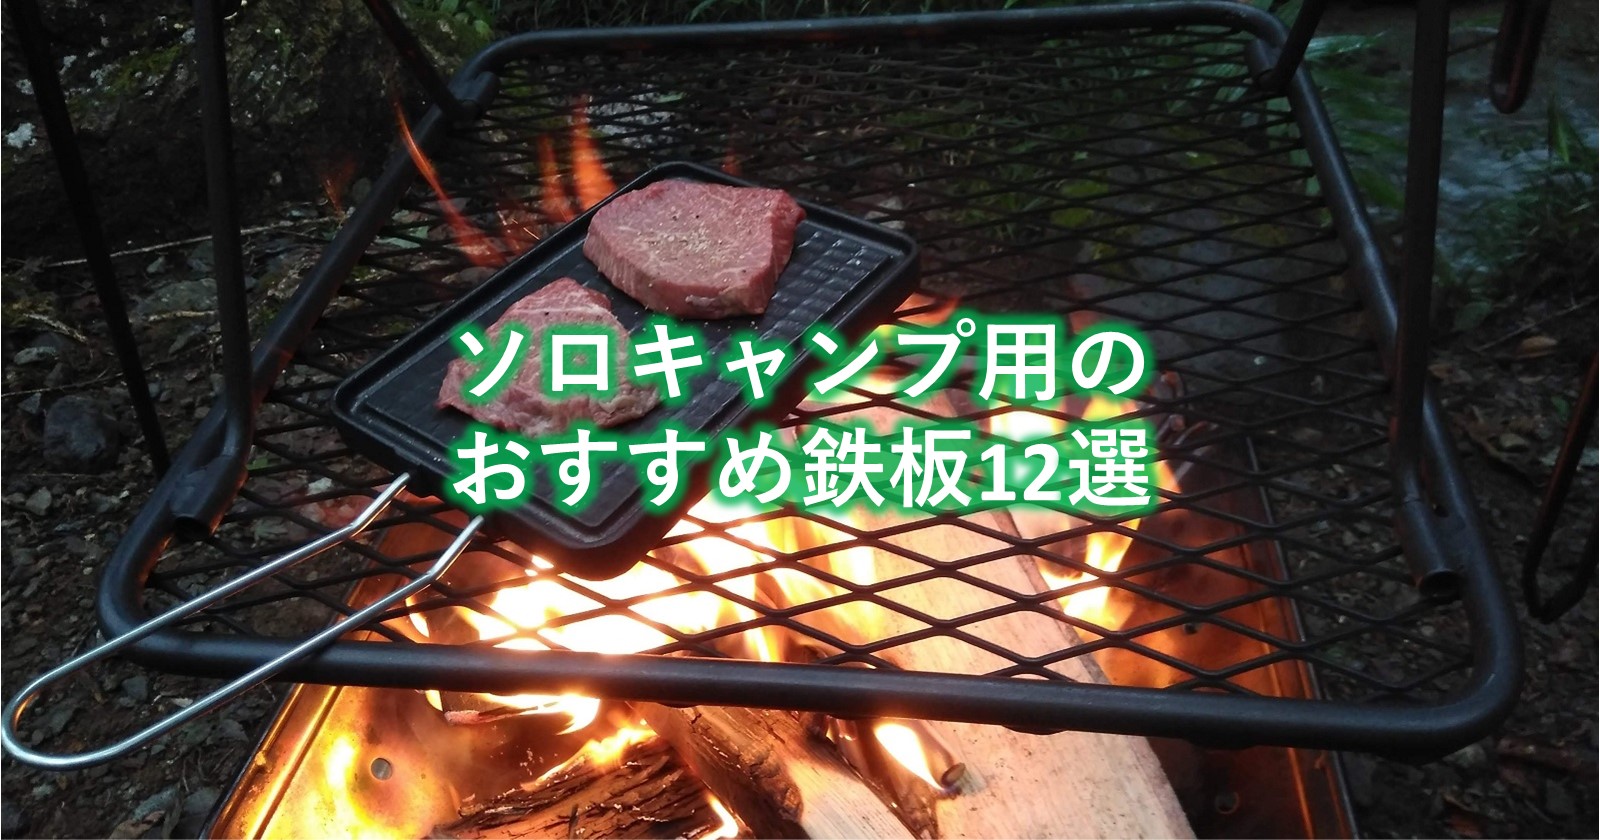 CAMPERソロ 鉄板 バーベキュー ミニ mini キャンプ 鉄板焼き 焼肉